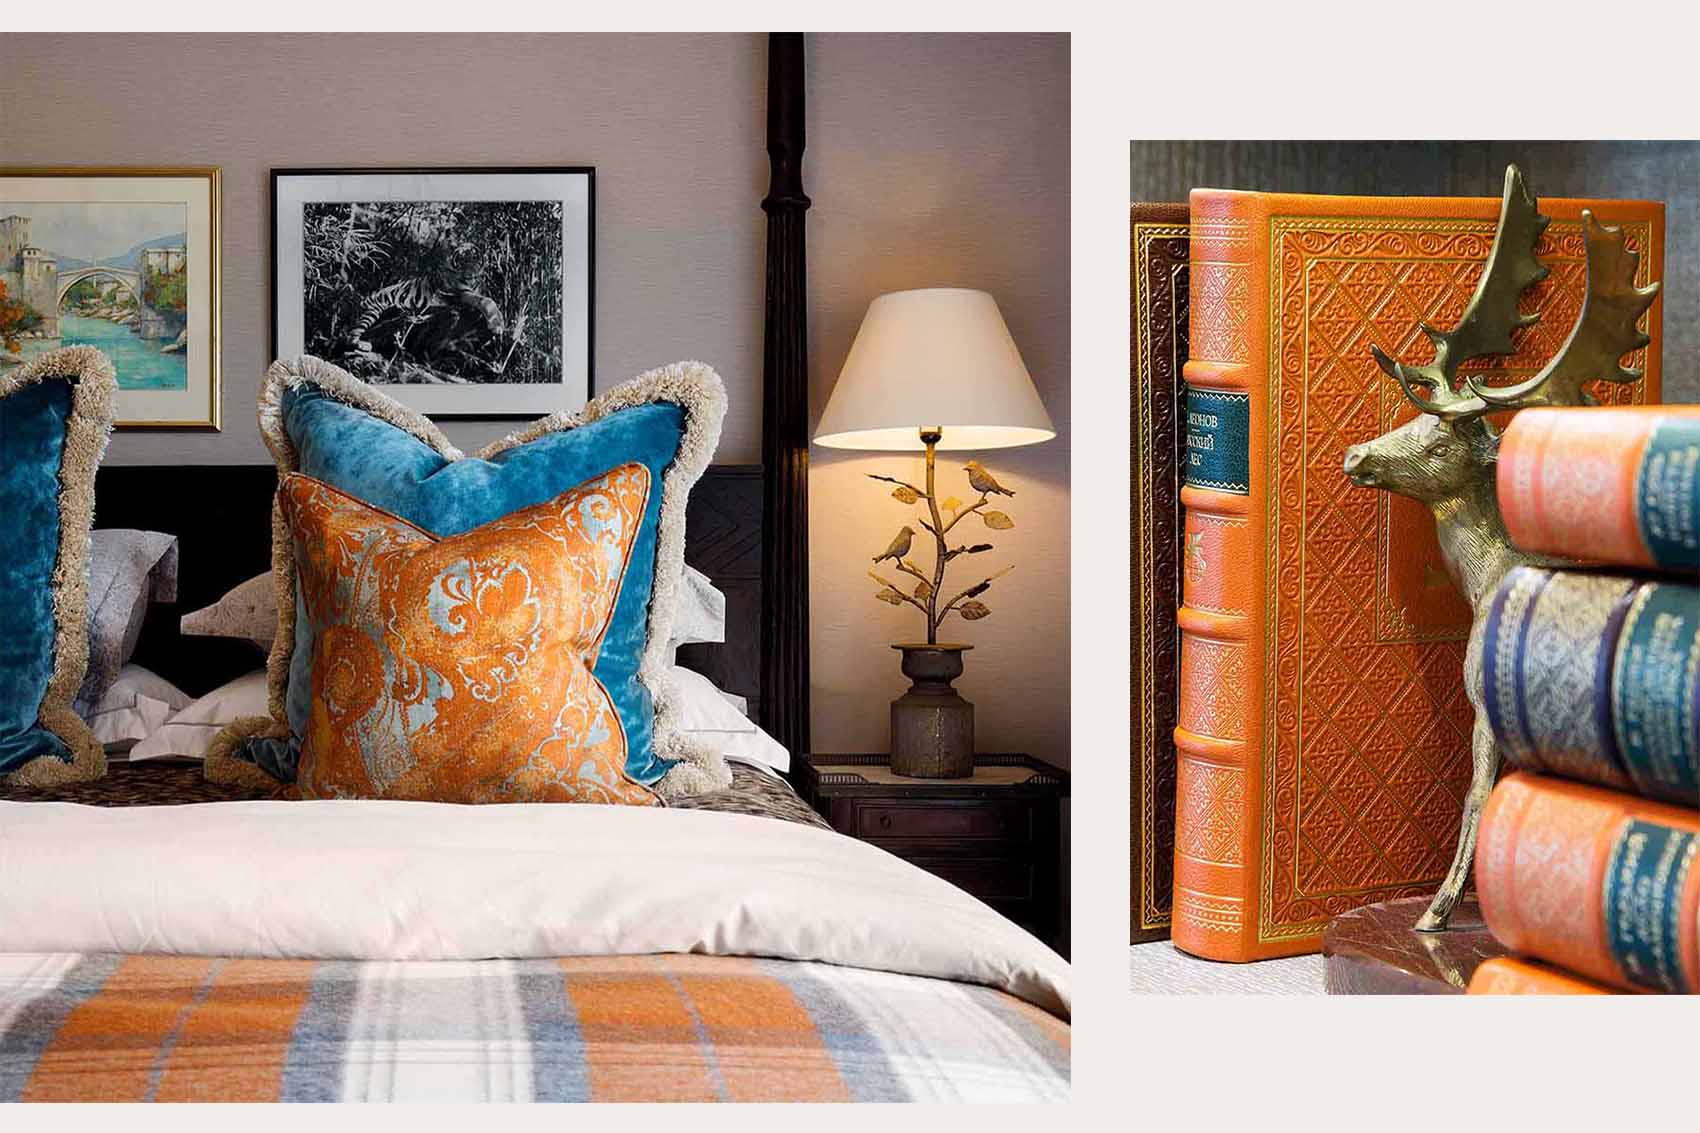 Shades of orange cushions and books, leather bound books, tartan bedspread